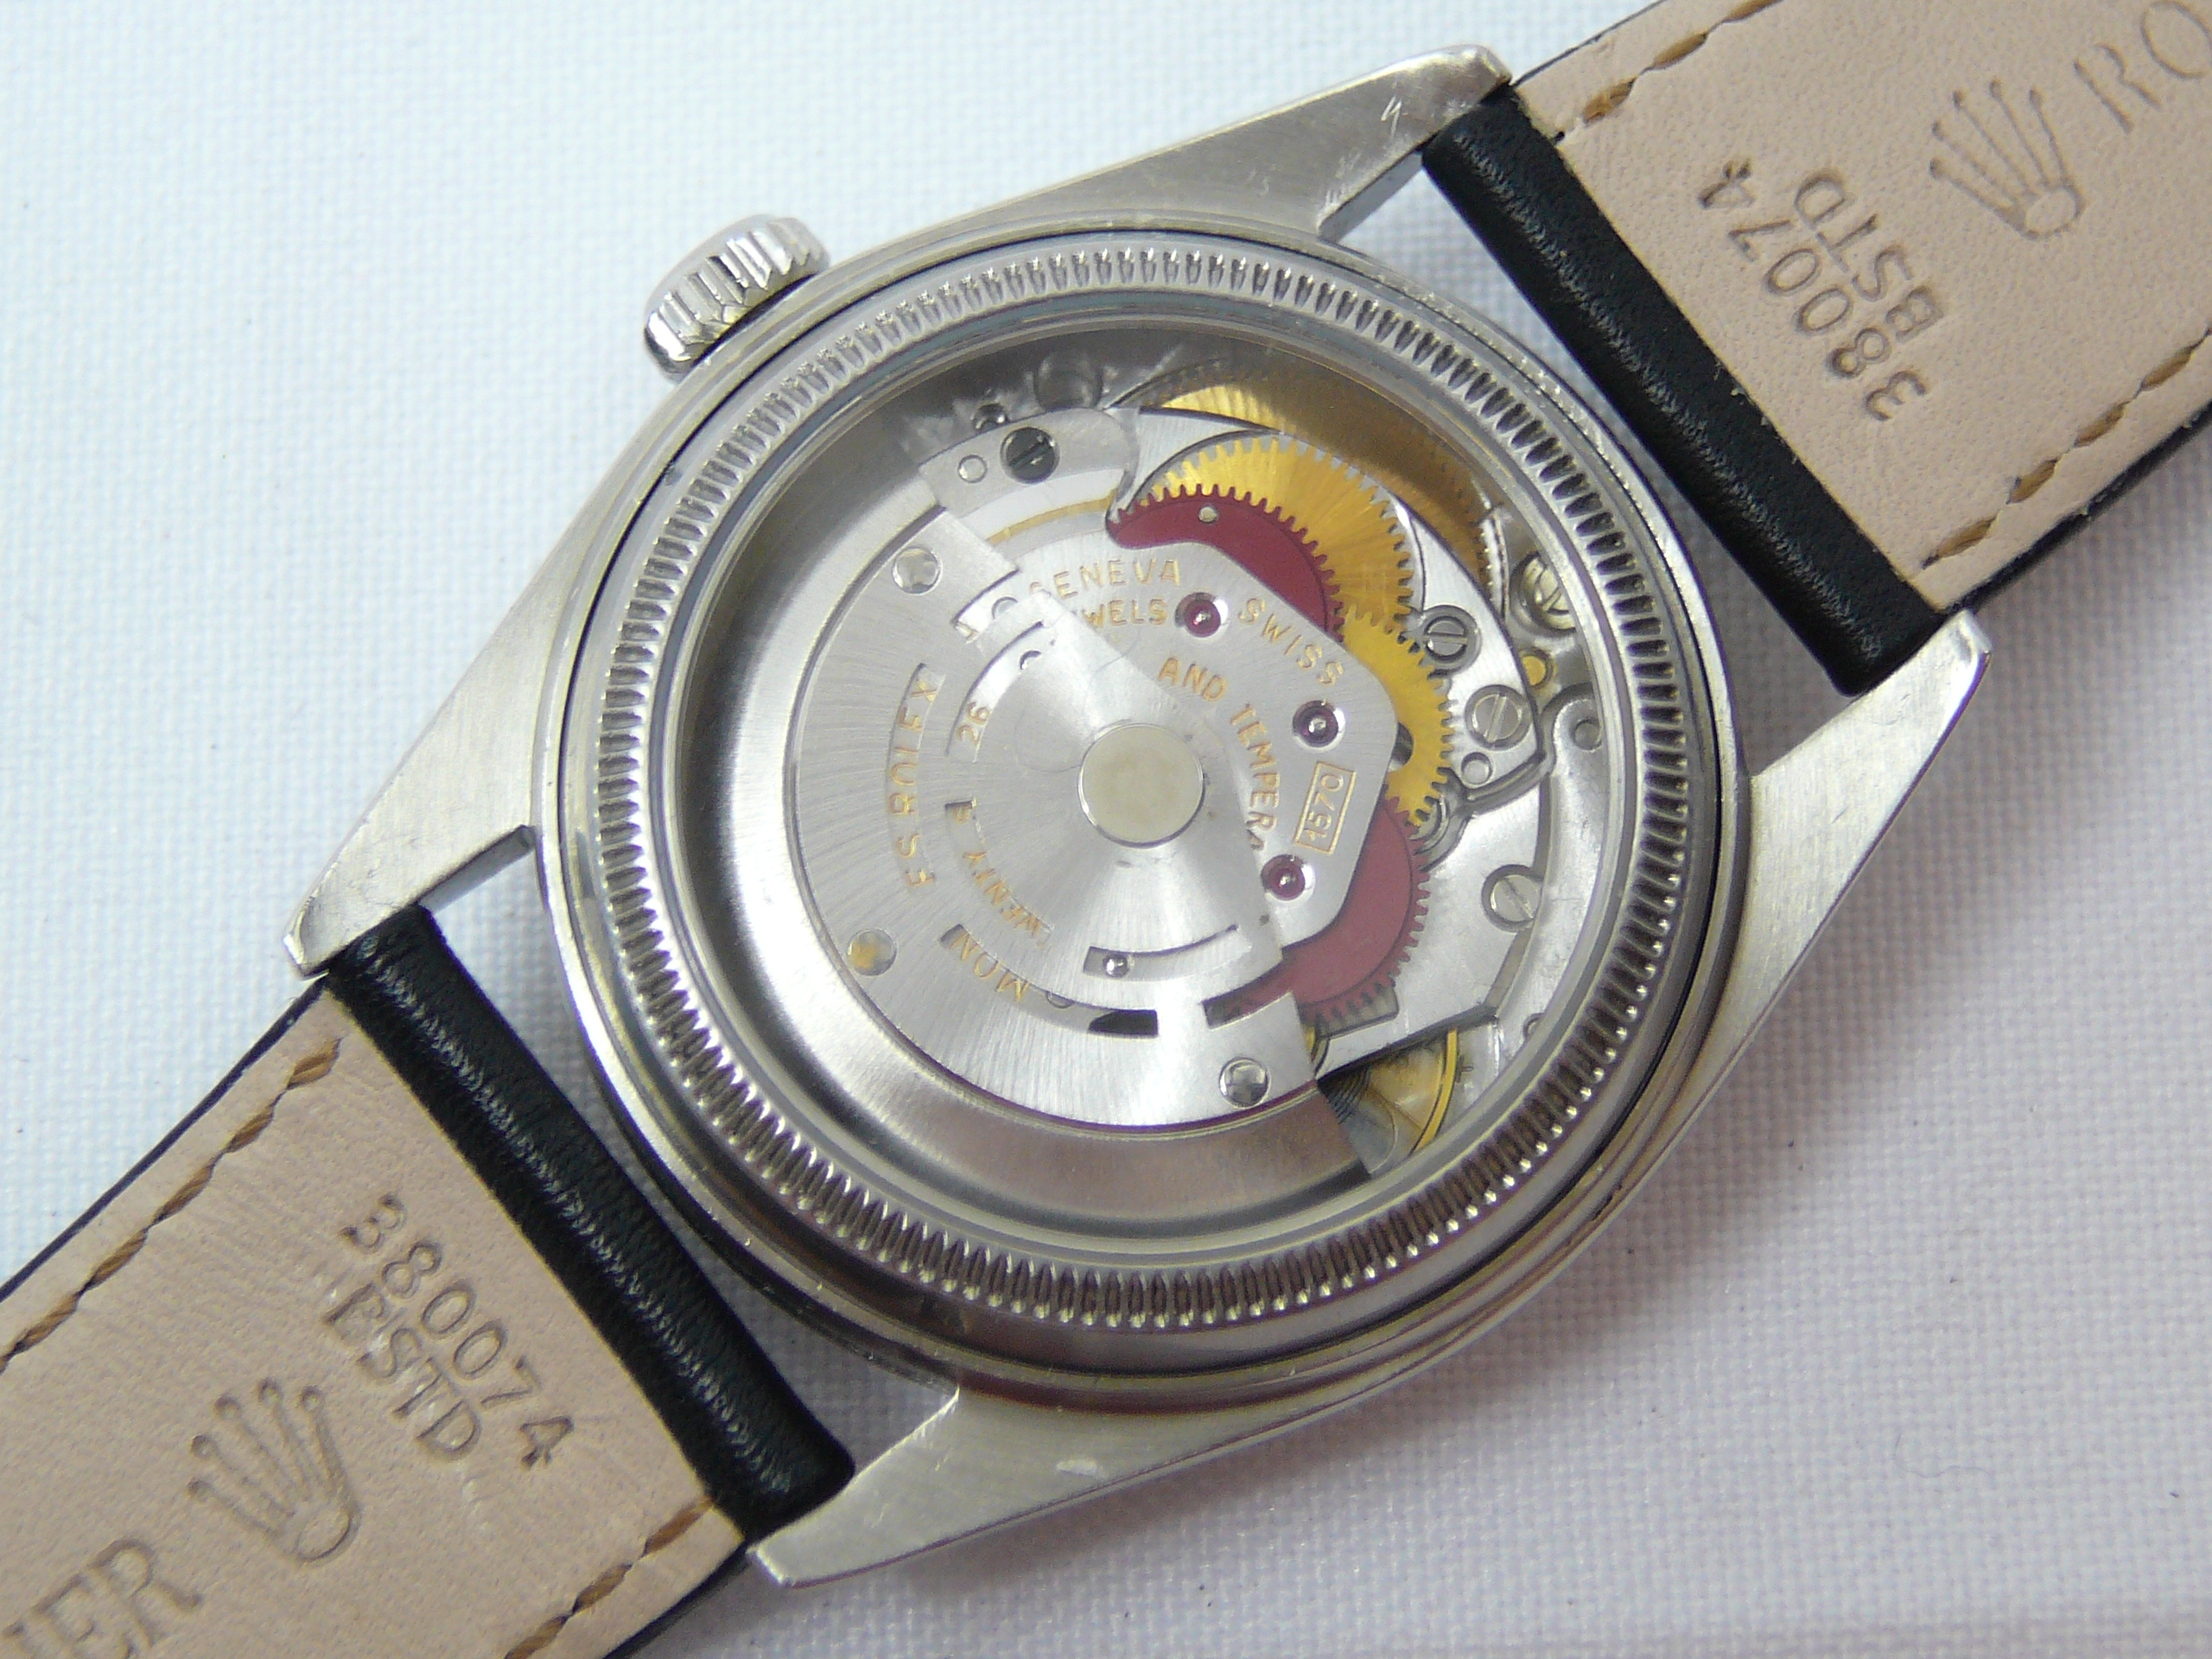 Gents Rolex Wristwatch - Image 4 of 5